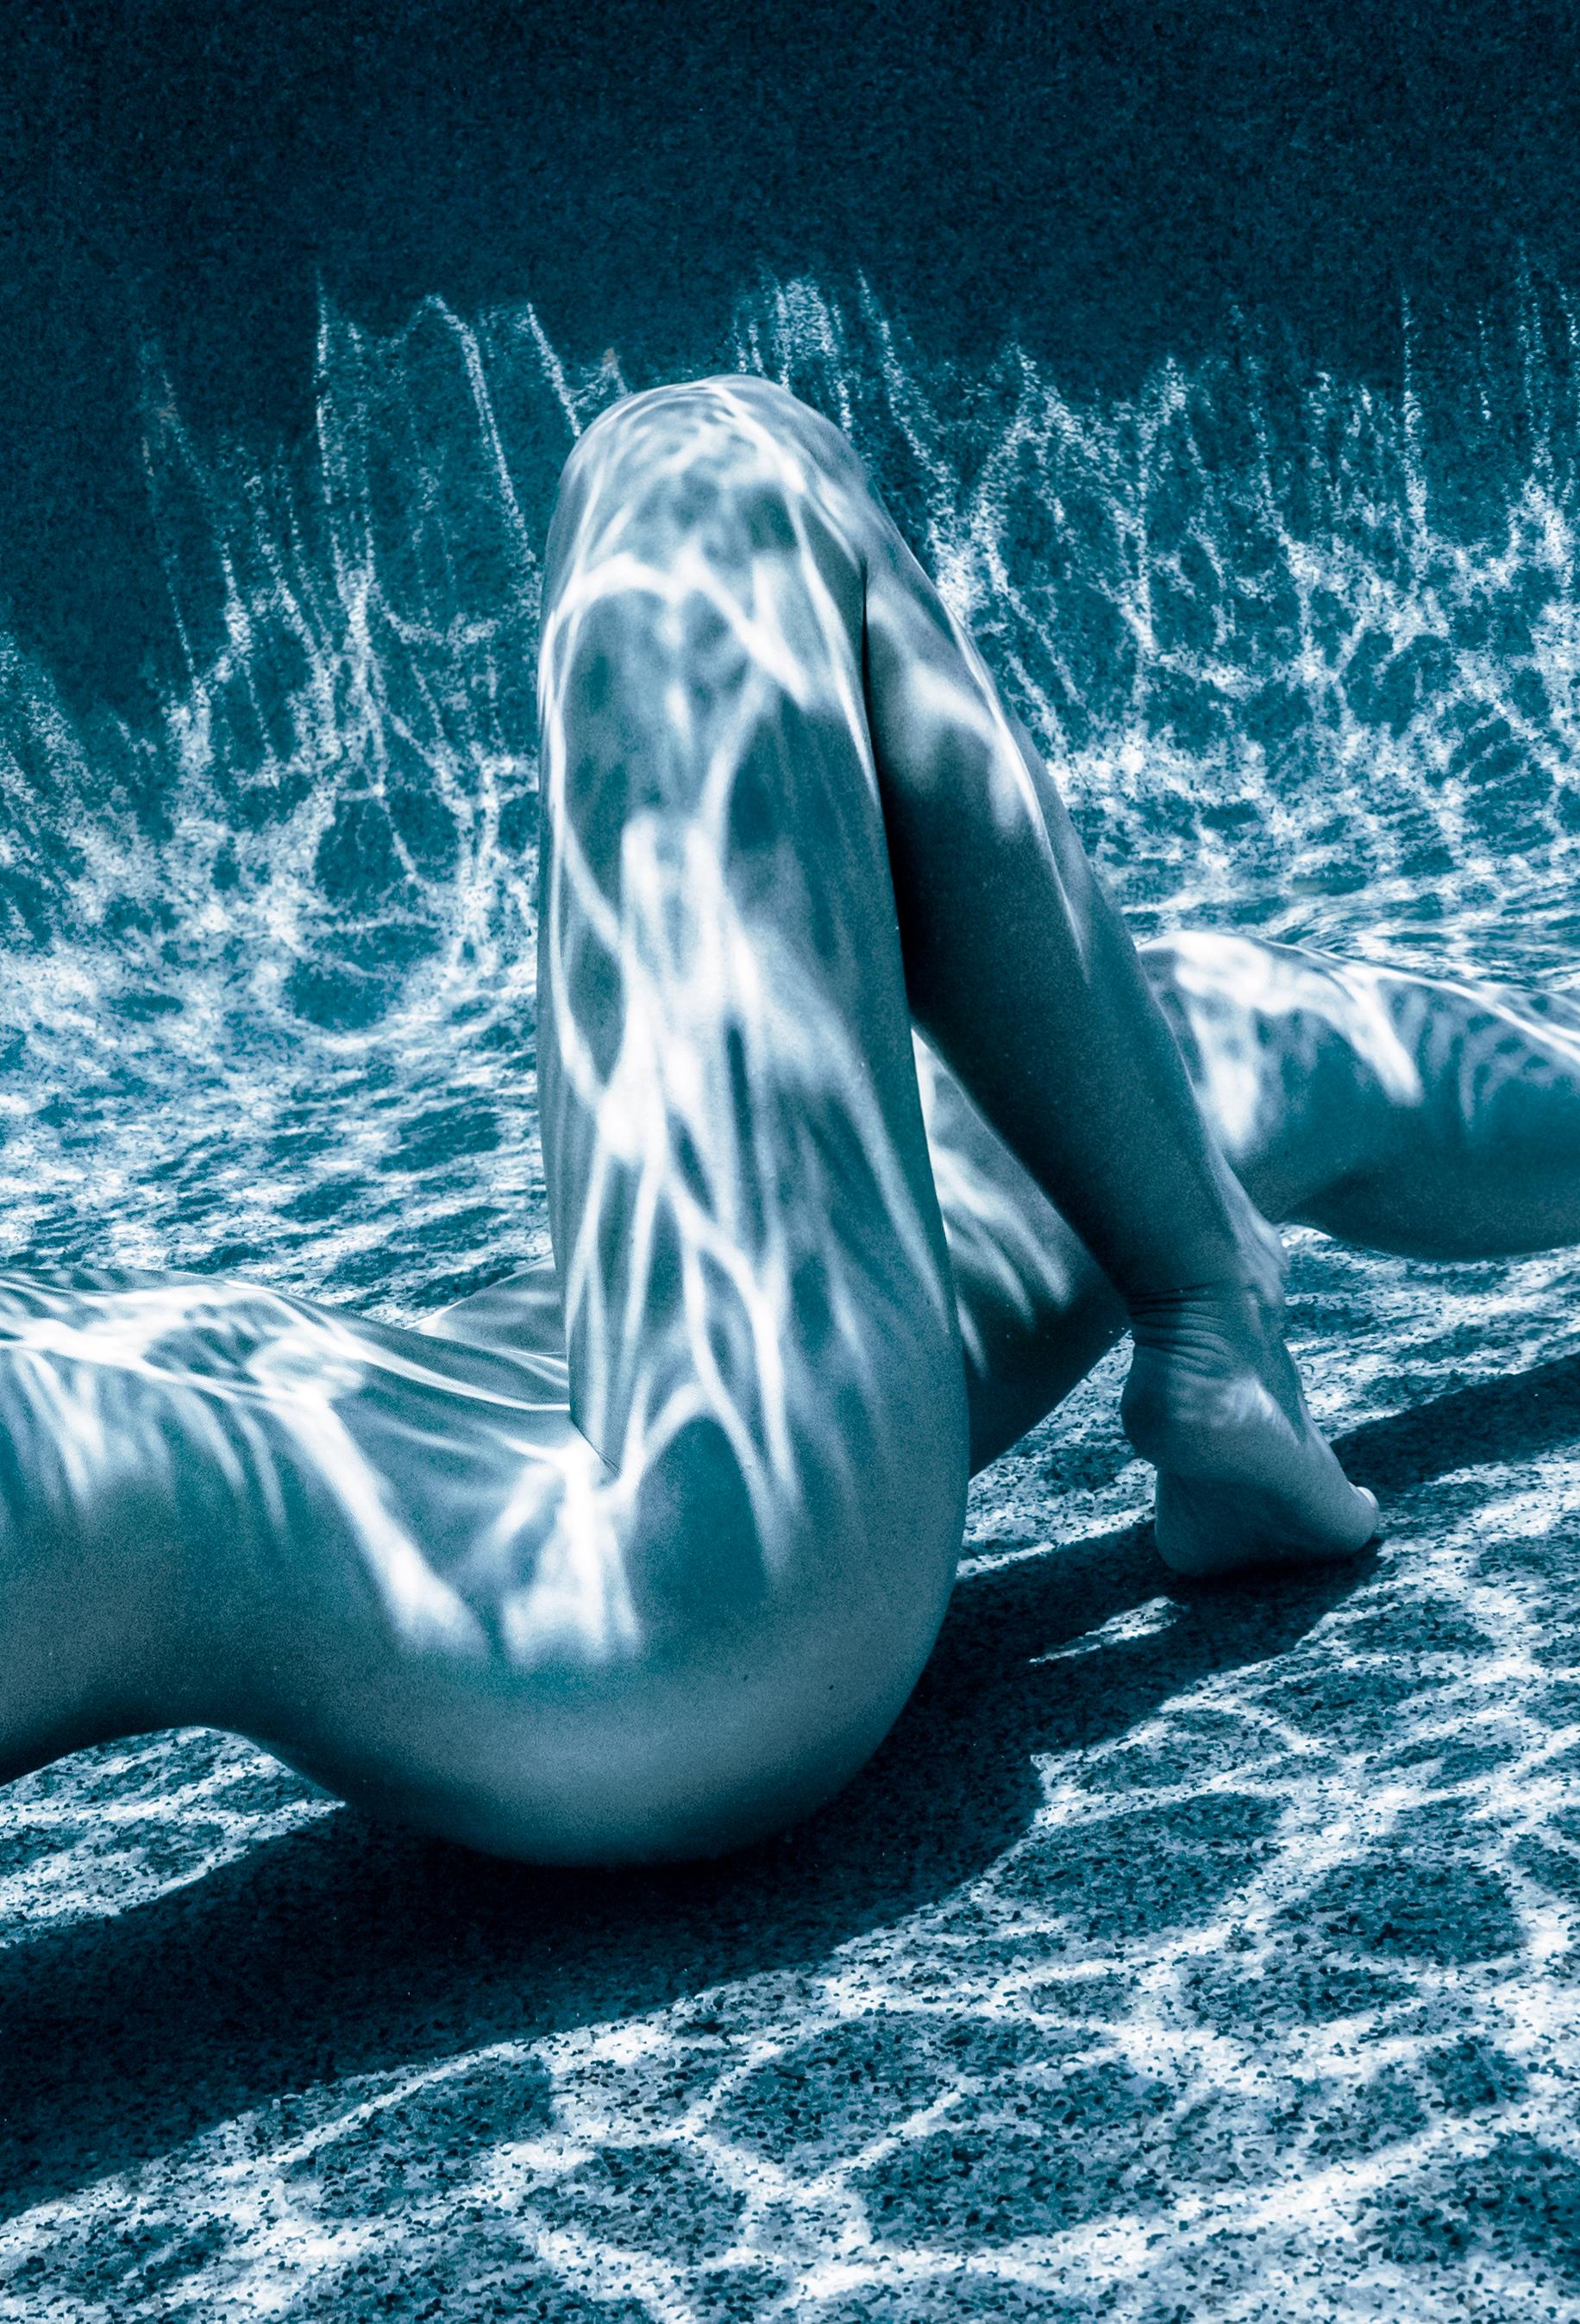 Moonlight - underwater nude photograph - archival pigment print 26x35